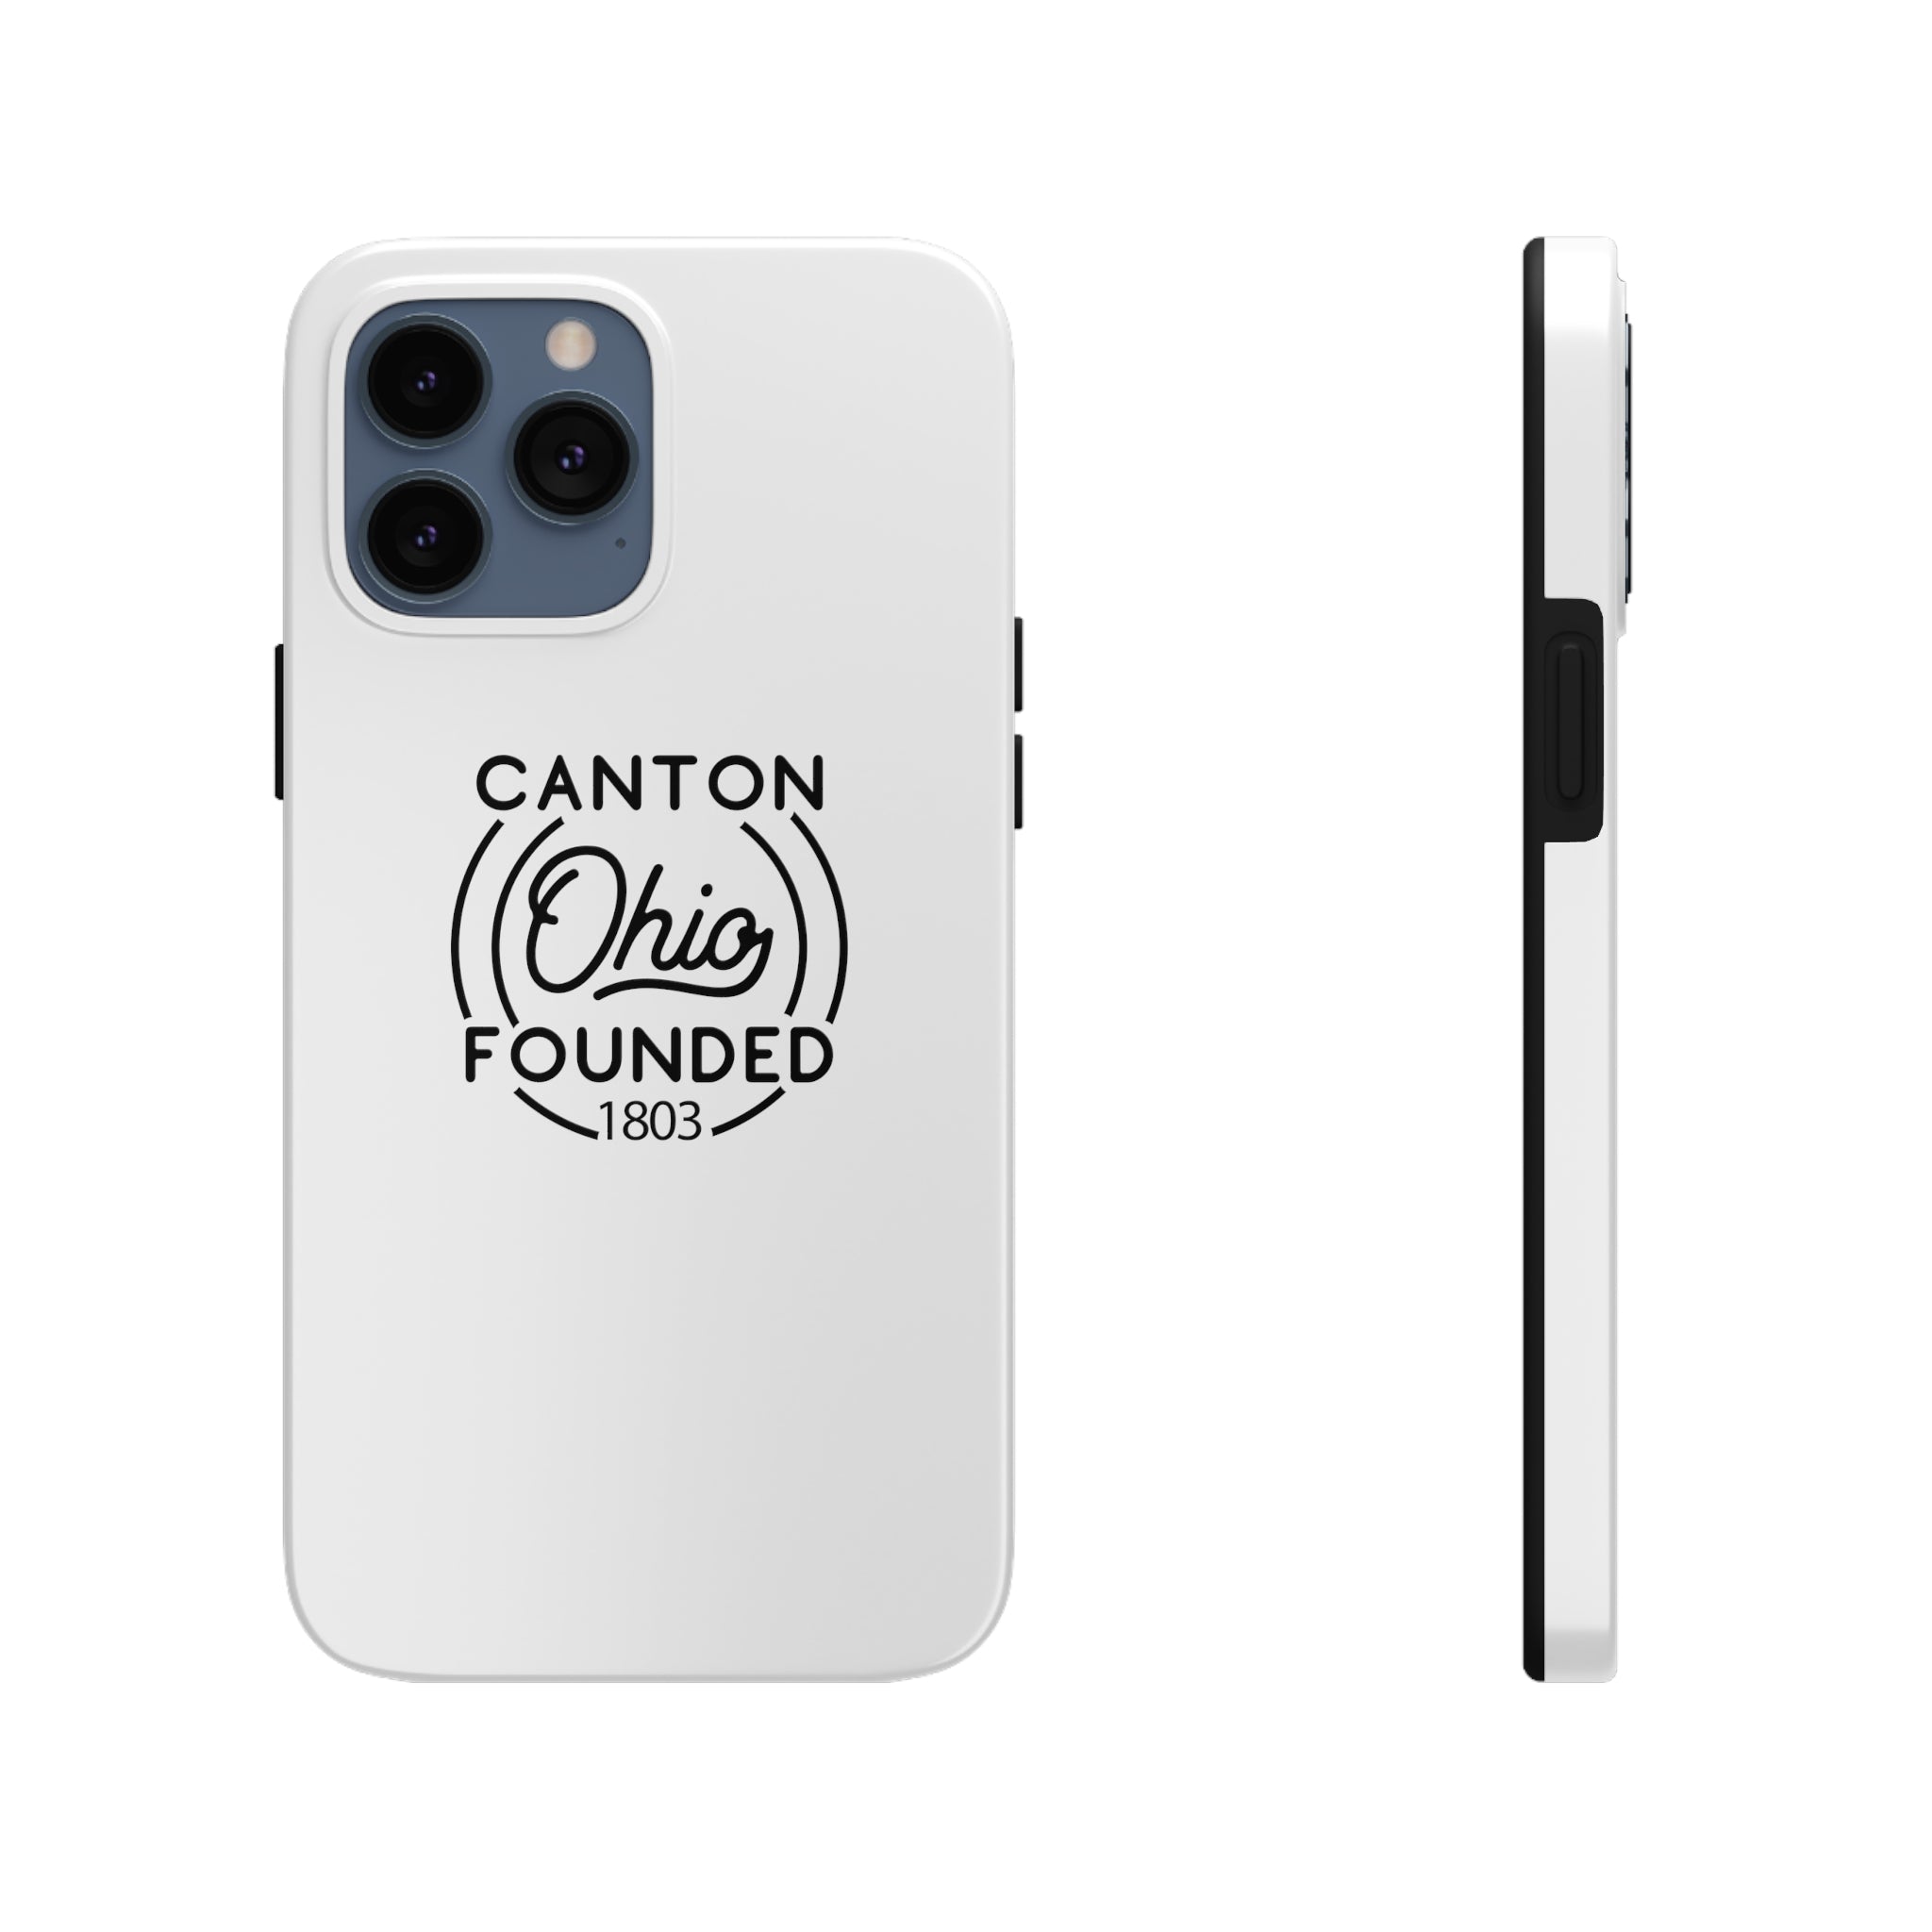 White iphone 13 pro max case for Canton, Ohio